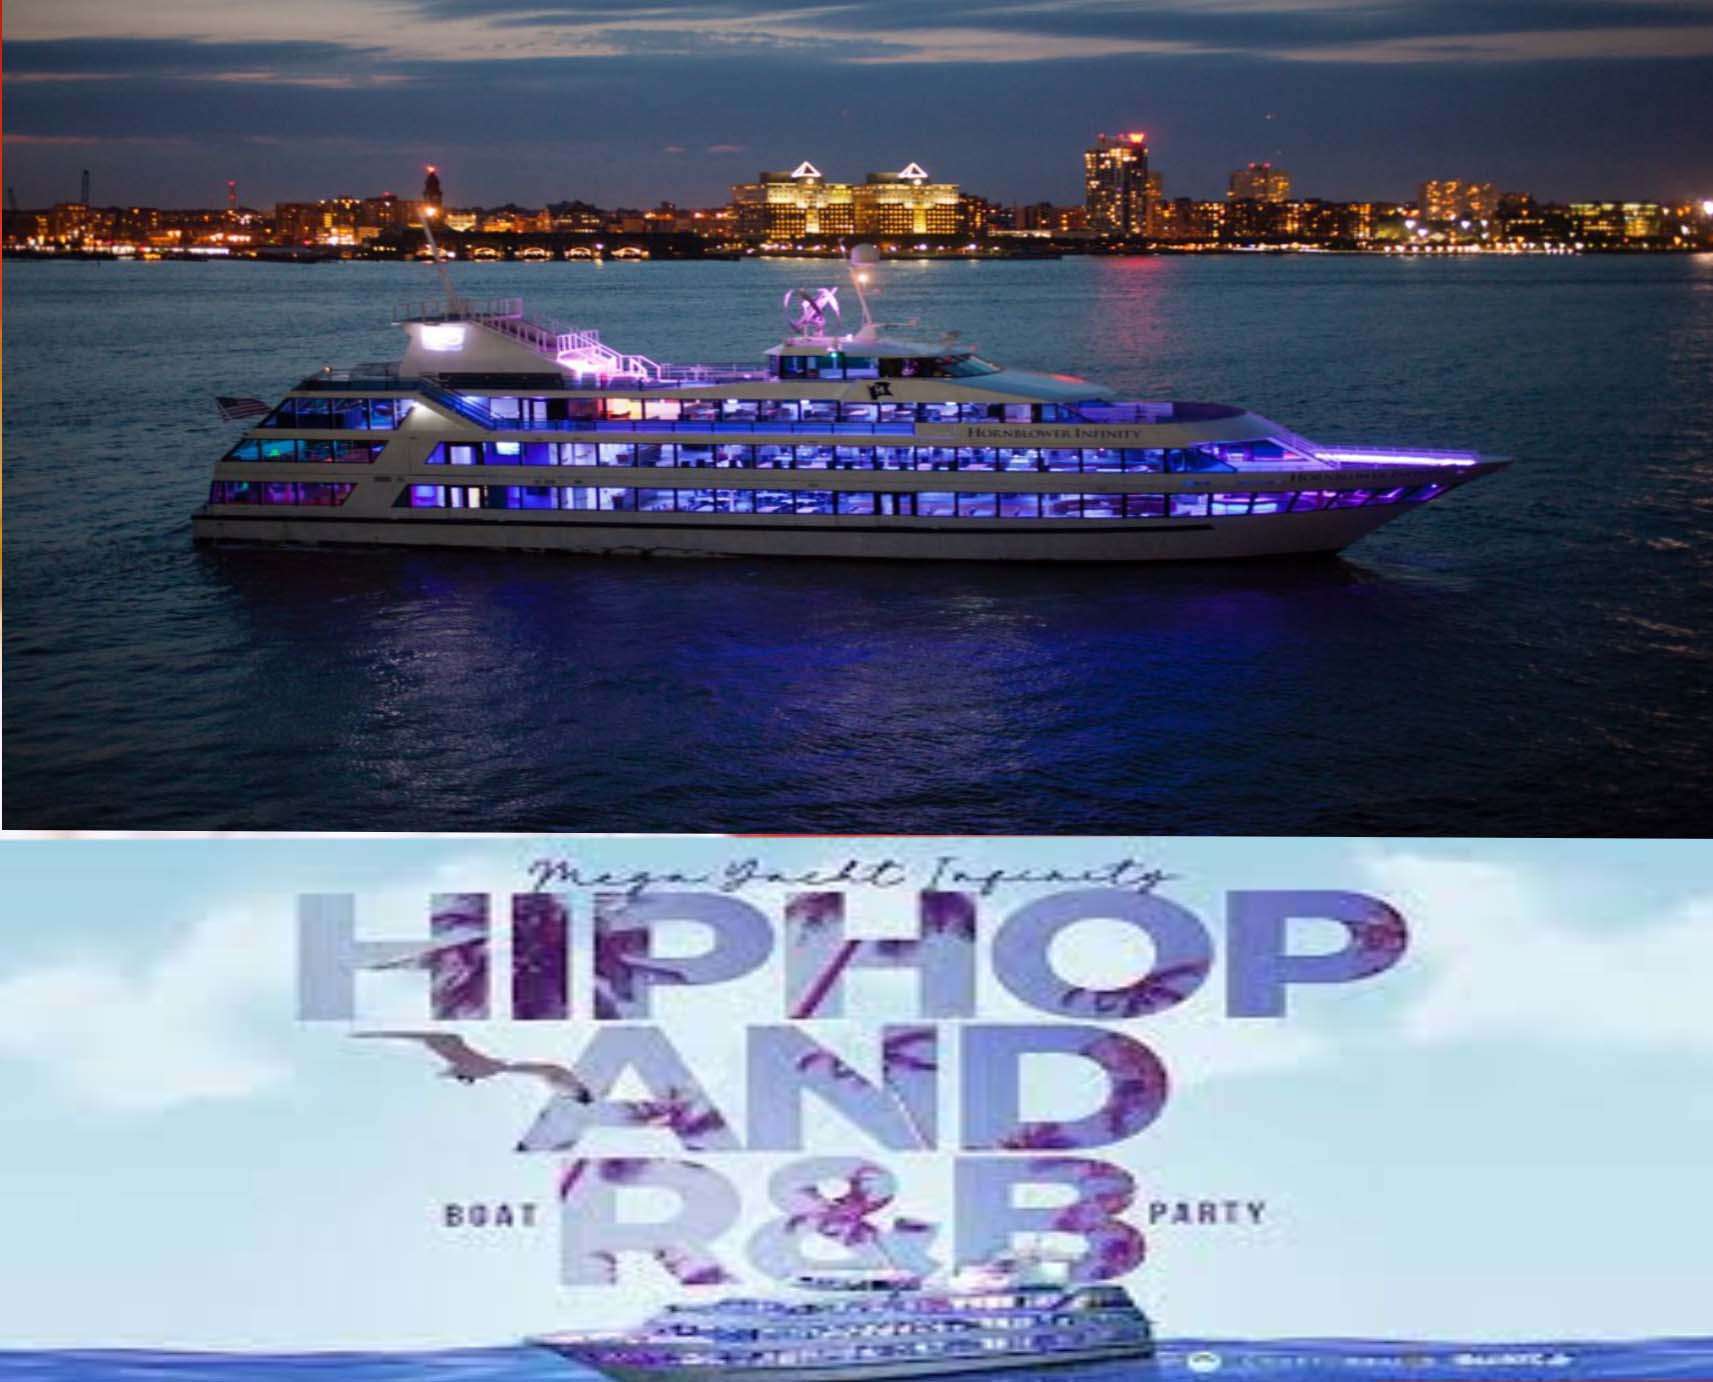 THE Hip Hop & RnB Boat Party NYC MEGA YACHT INFINITY